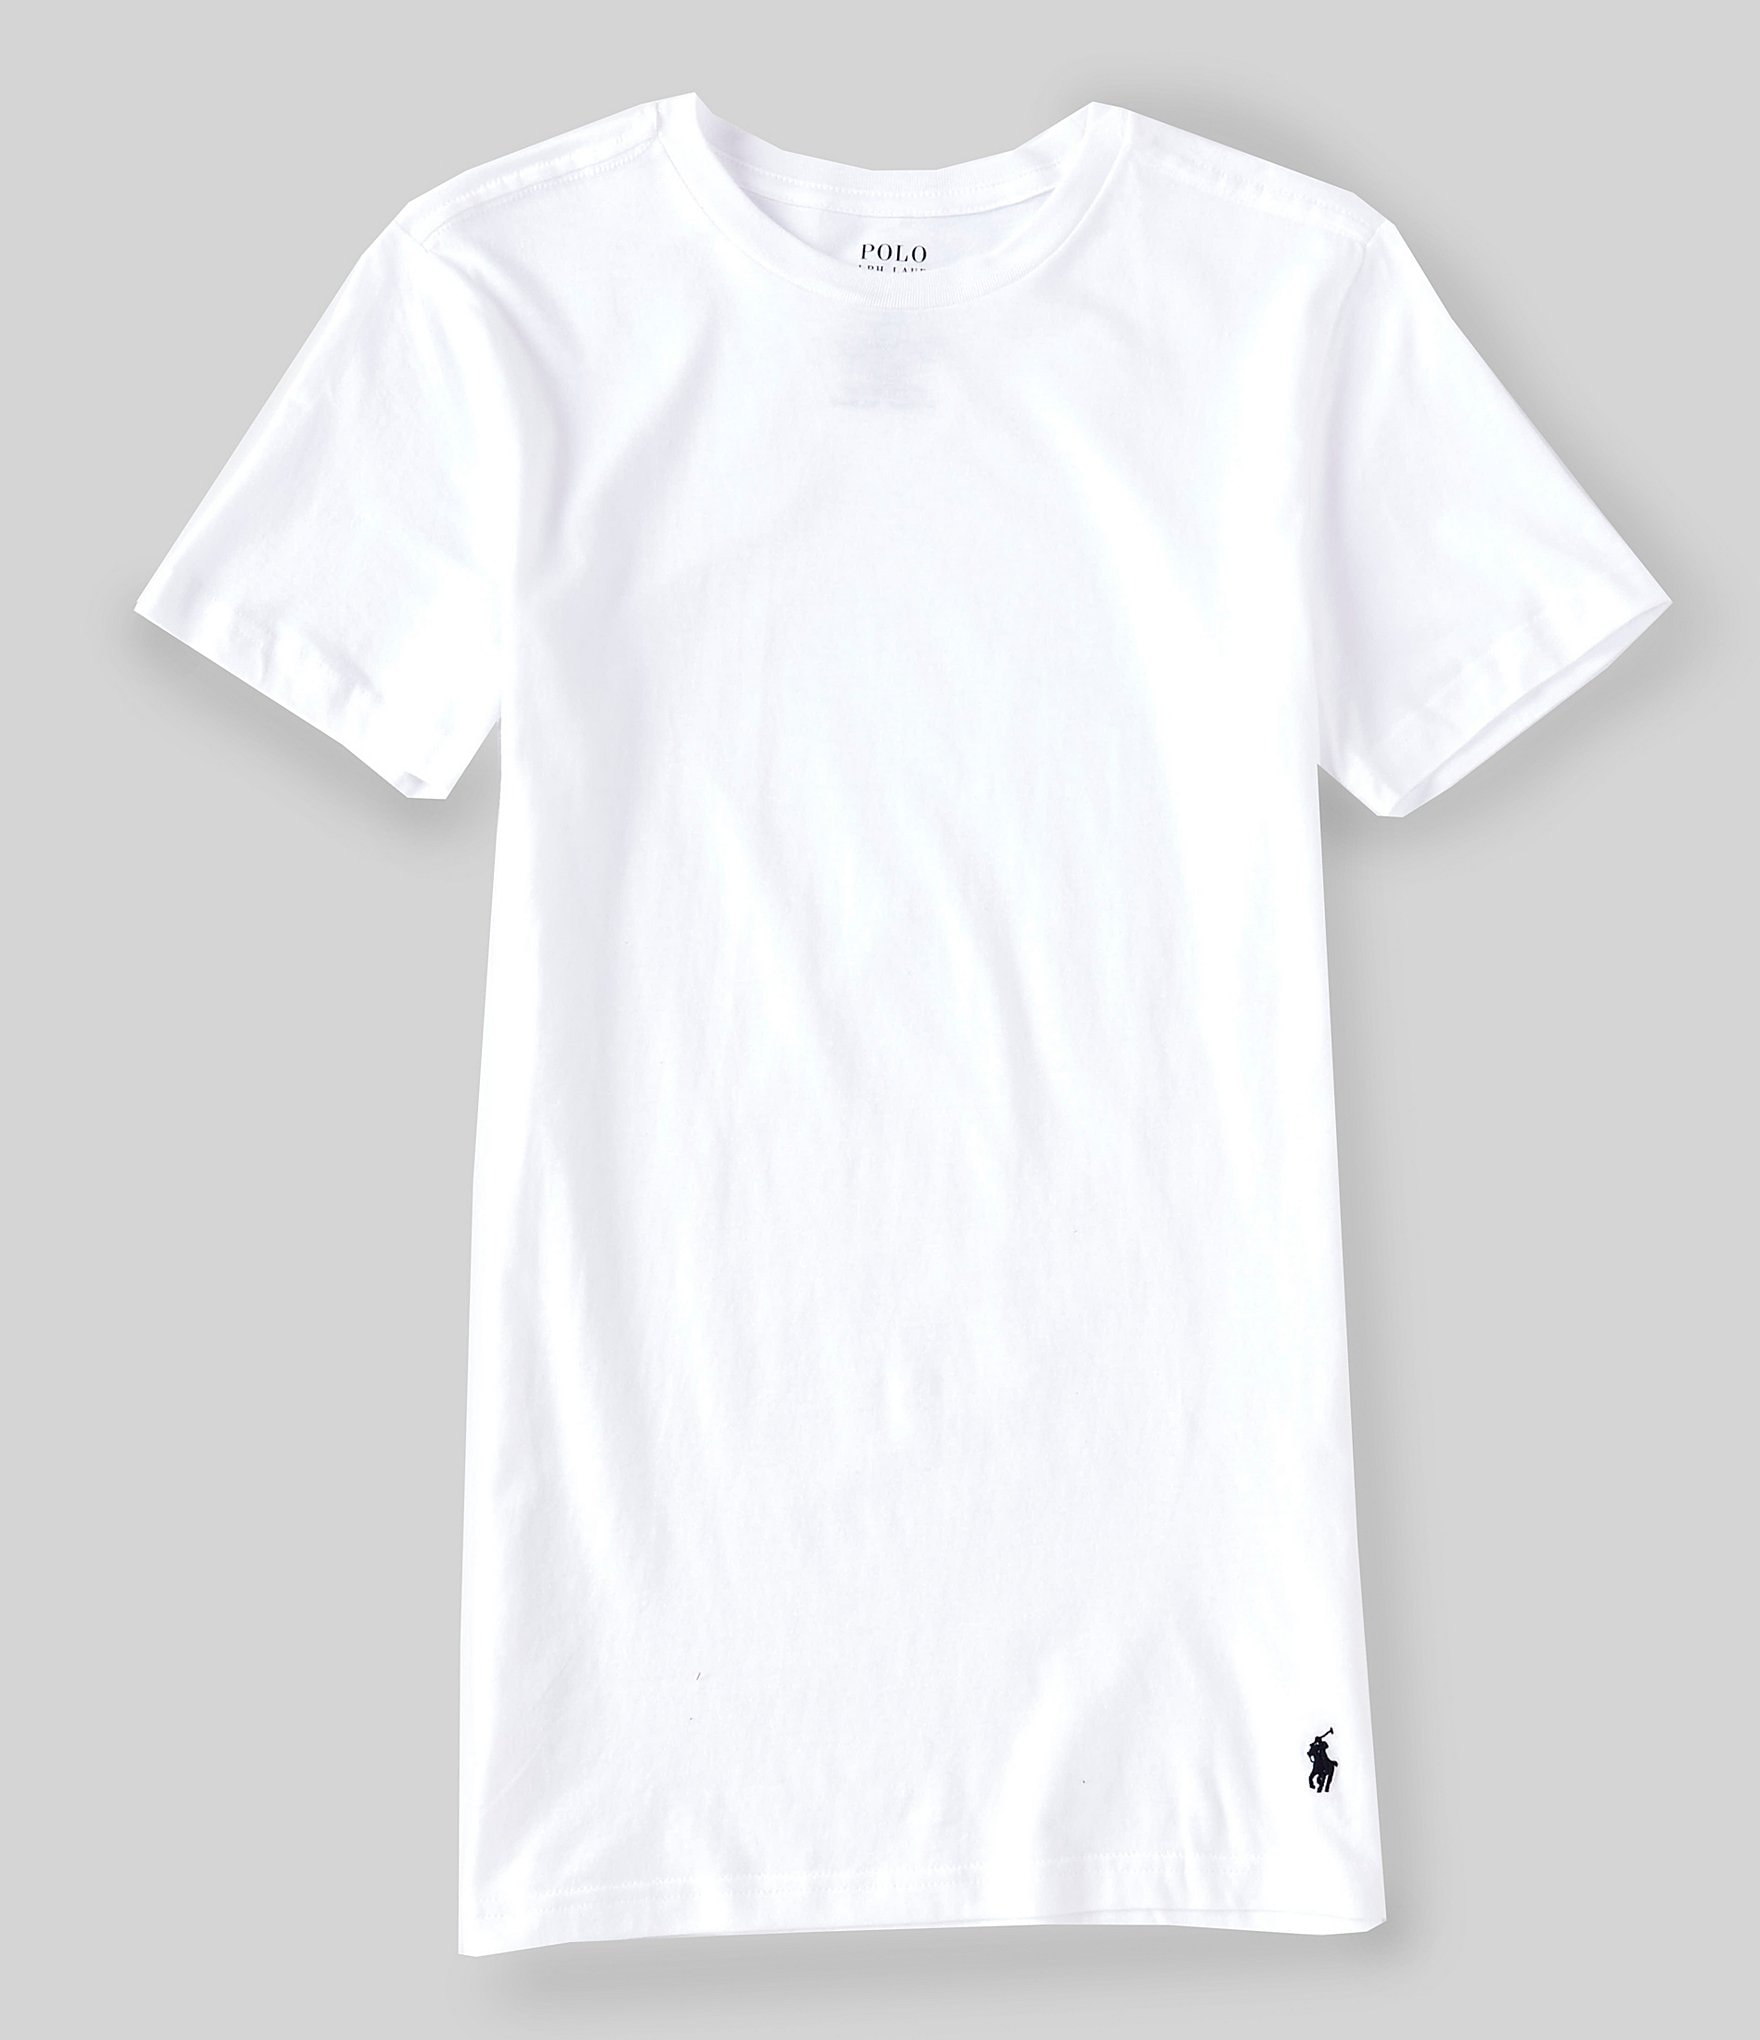 Polo Ralph Lauren Slim Fit Crew Neck T-Shirts 5-Pack |